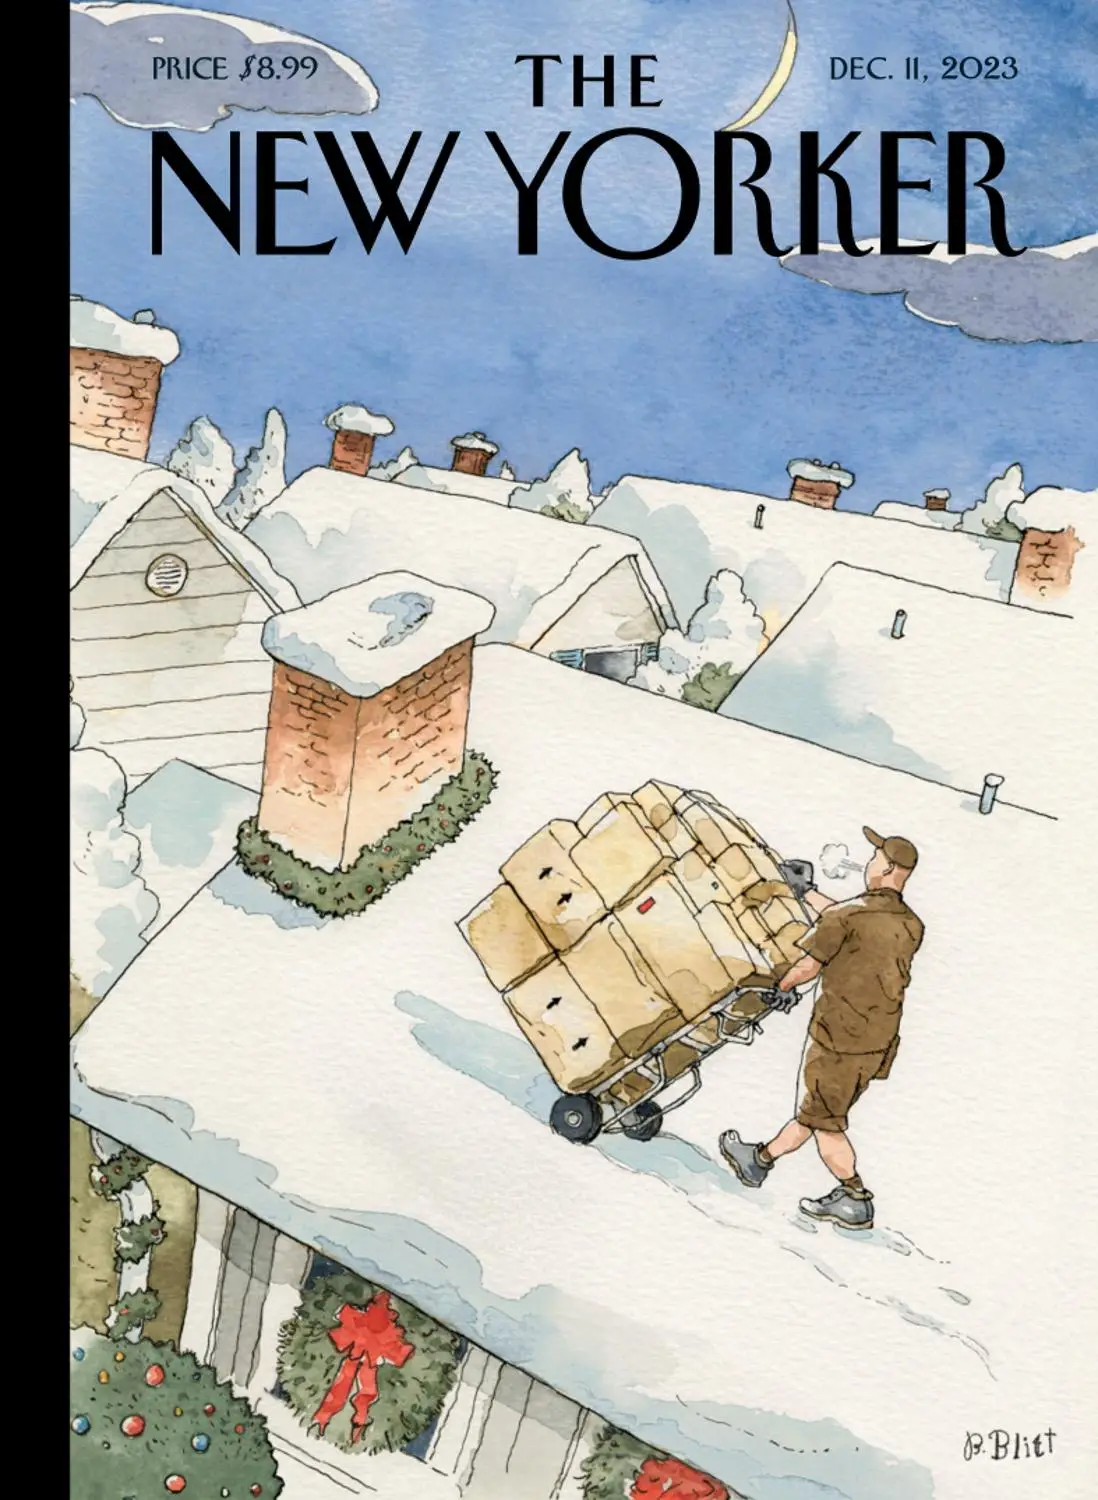 The New Yorker December 11, 2023 / AvaxHome